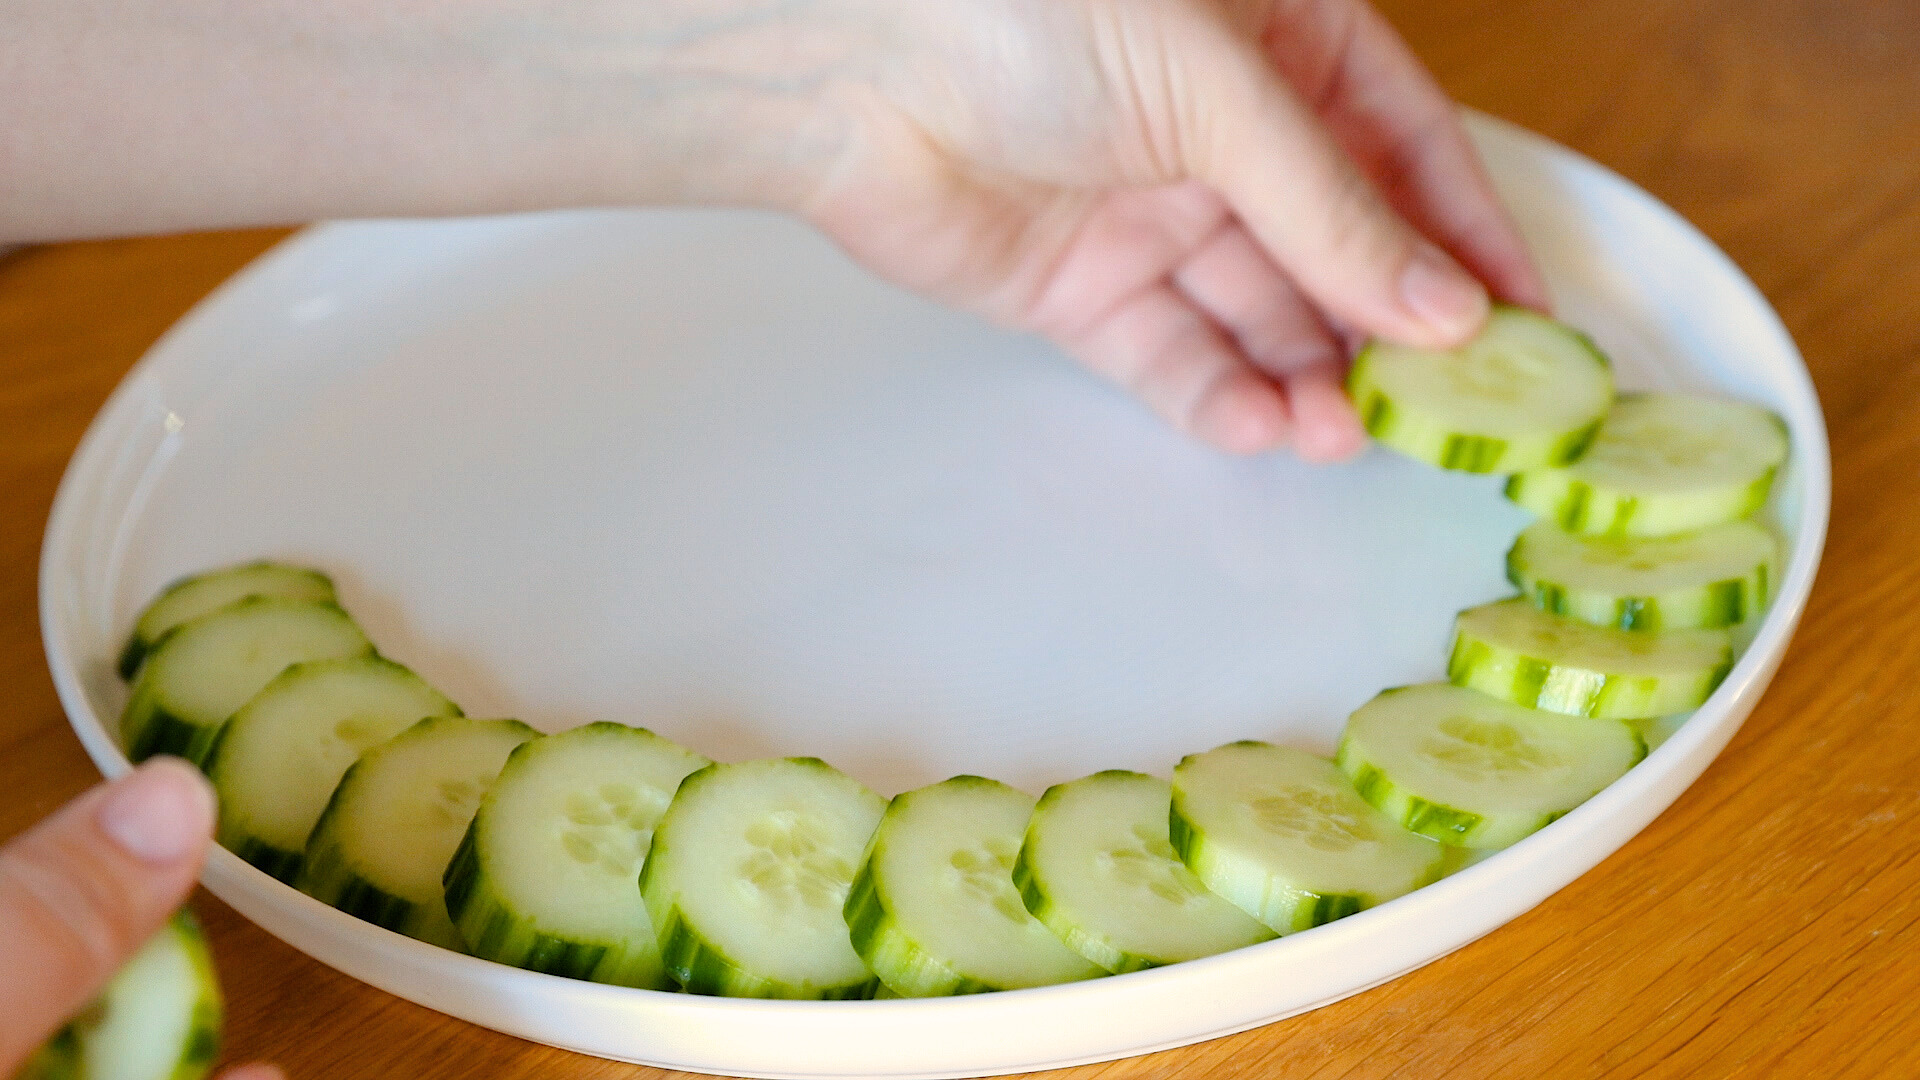 hands arranging sliced cucumbers on a veggie platter.